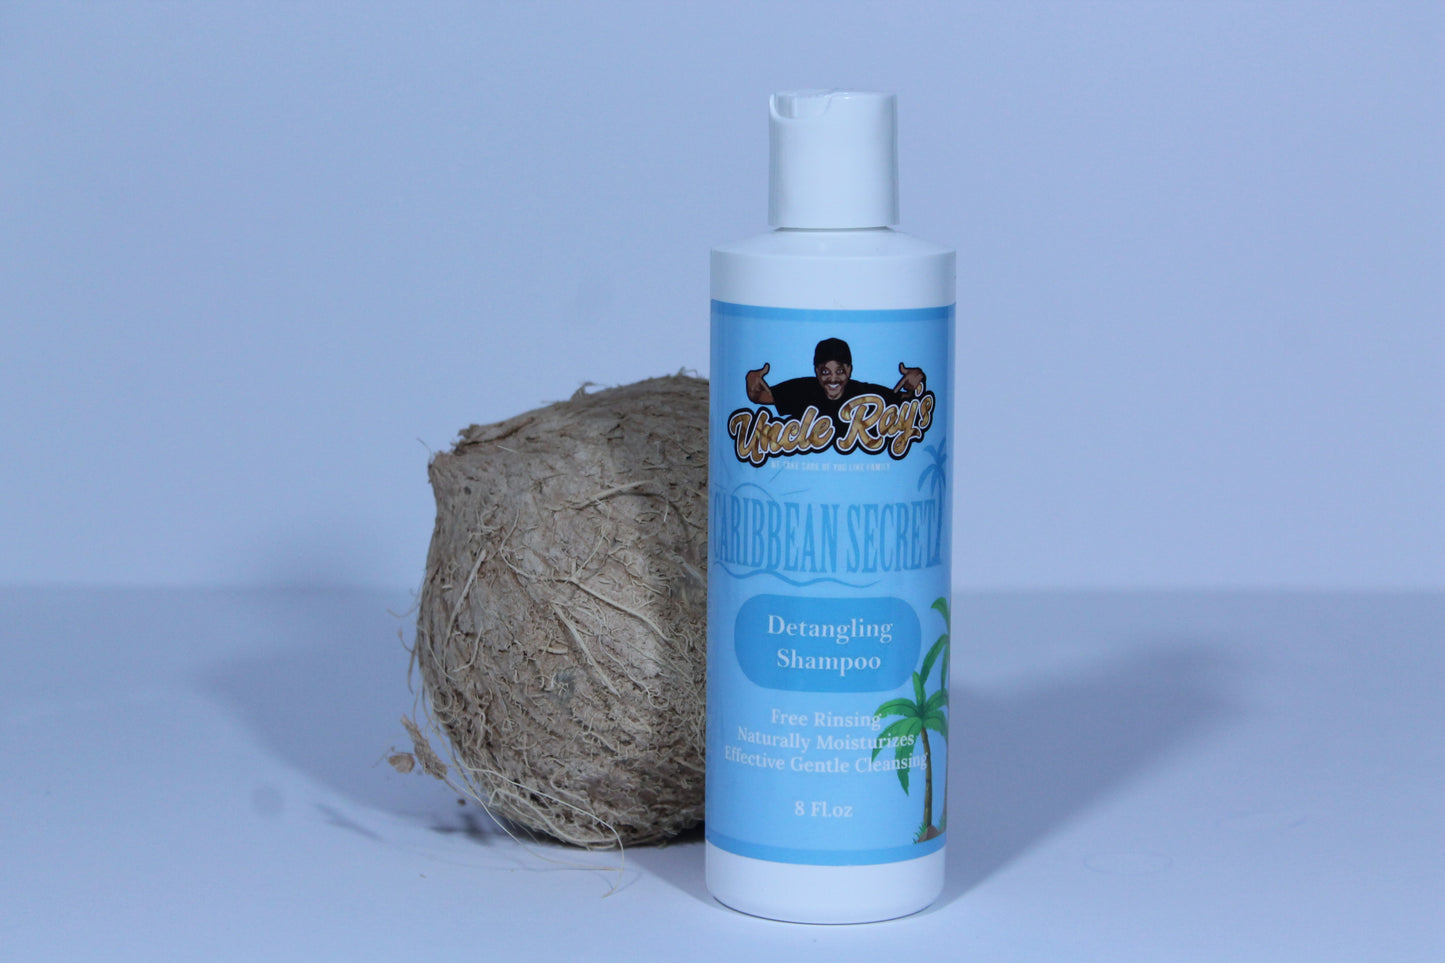 Caribbean Secret Detangling Shampoo